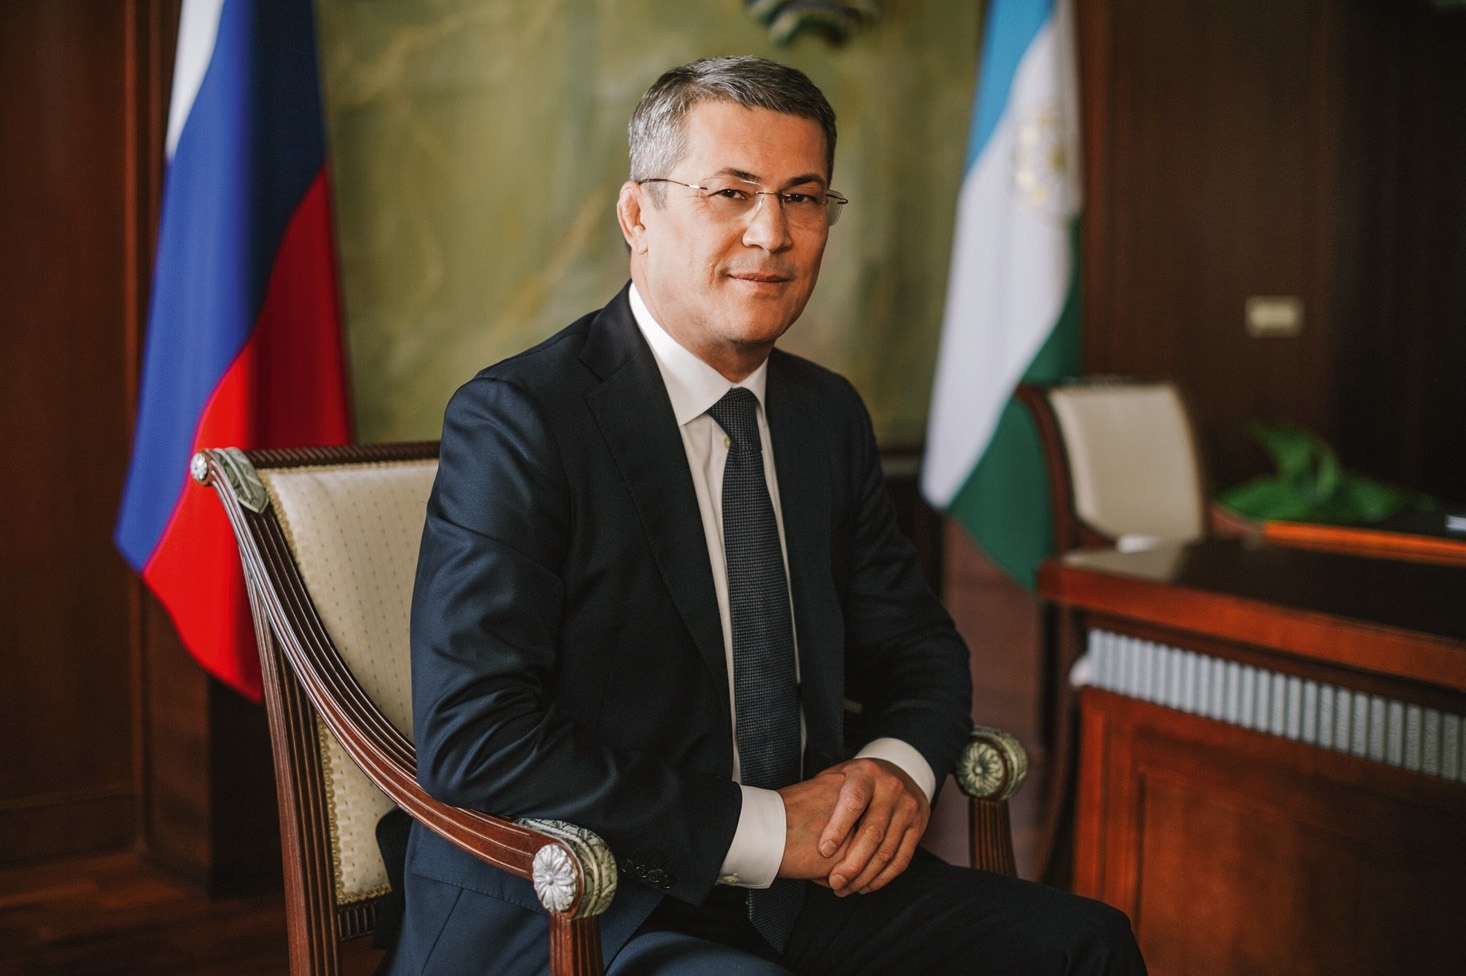 Глава Республики Башкортостан Радий Фаритович Хабиров